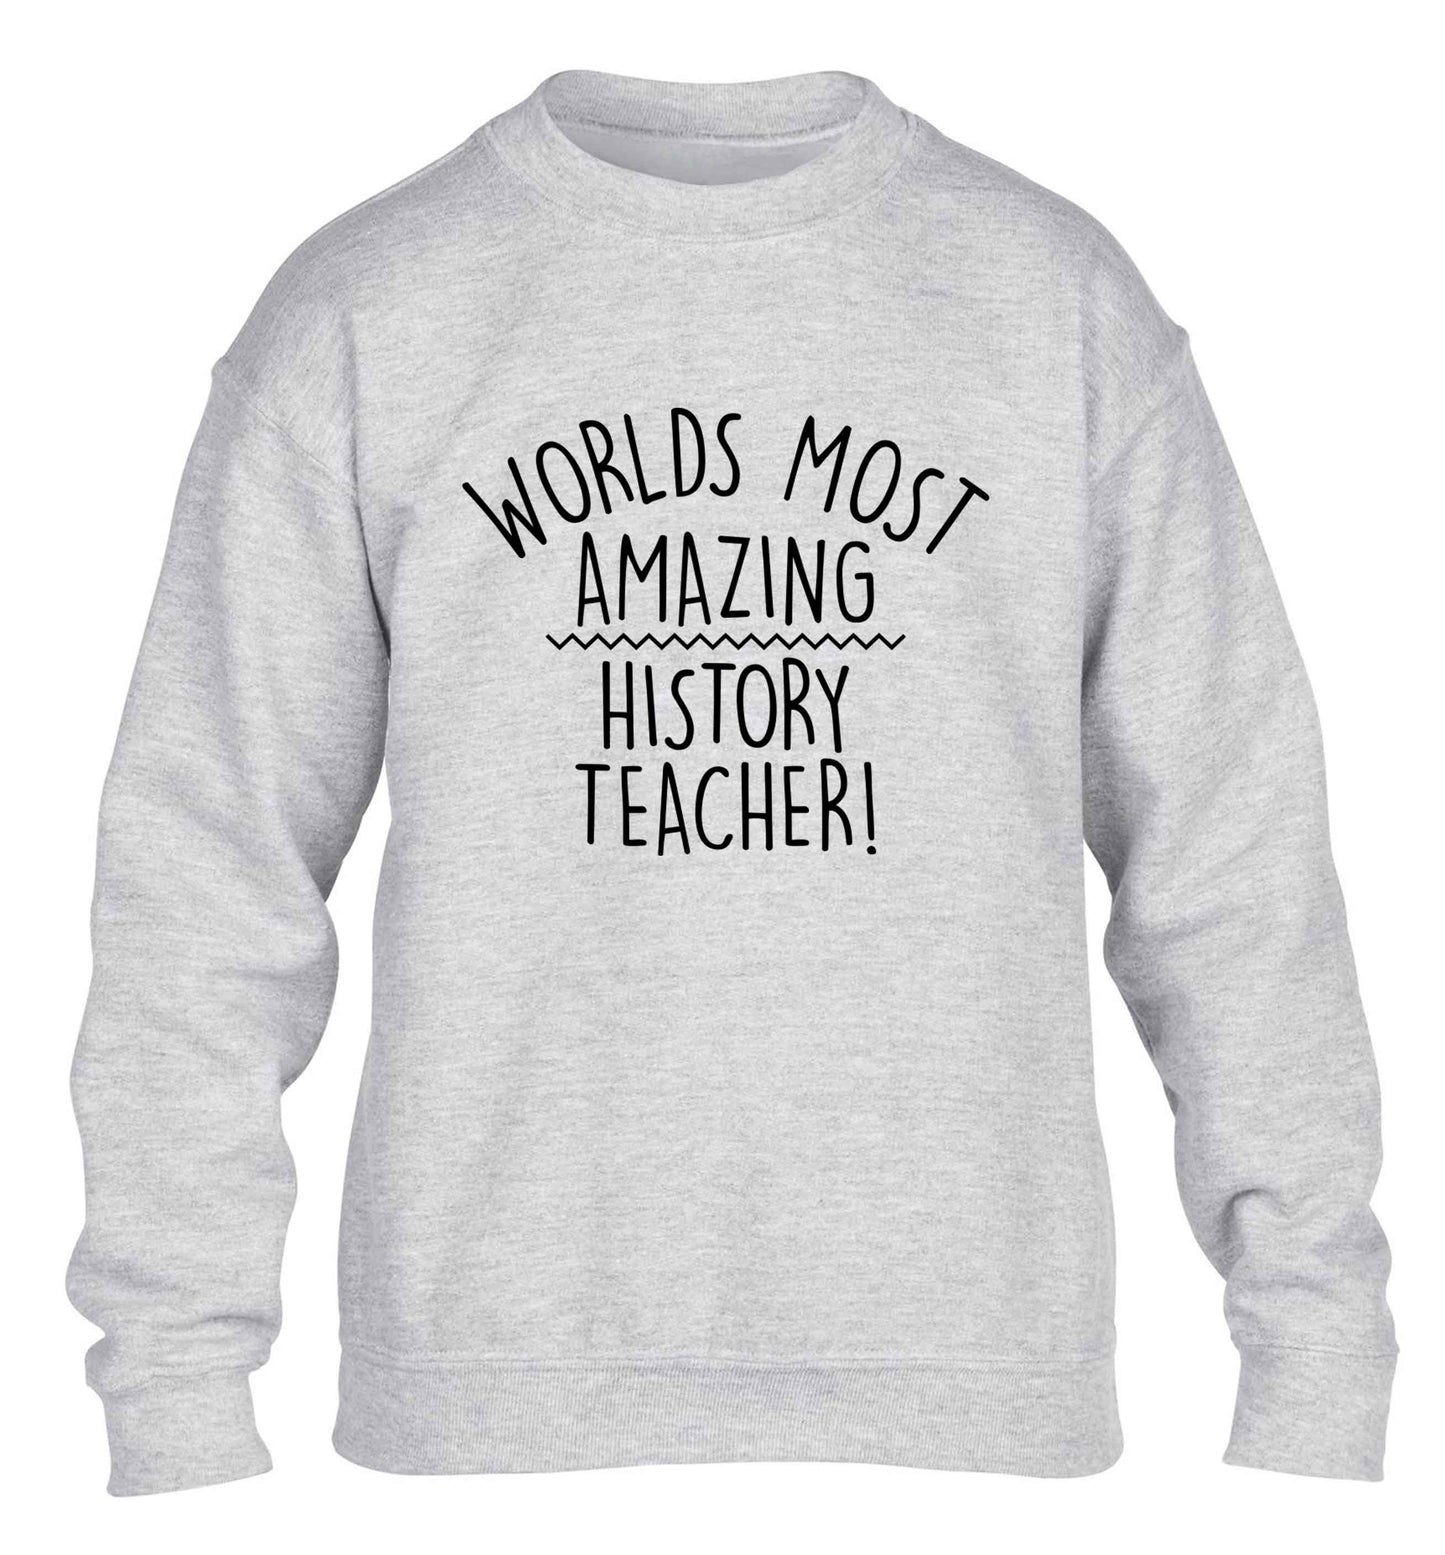 Worlds most amazing History teacher children's grey sweater 12-13 Years